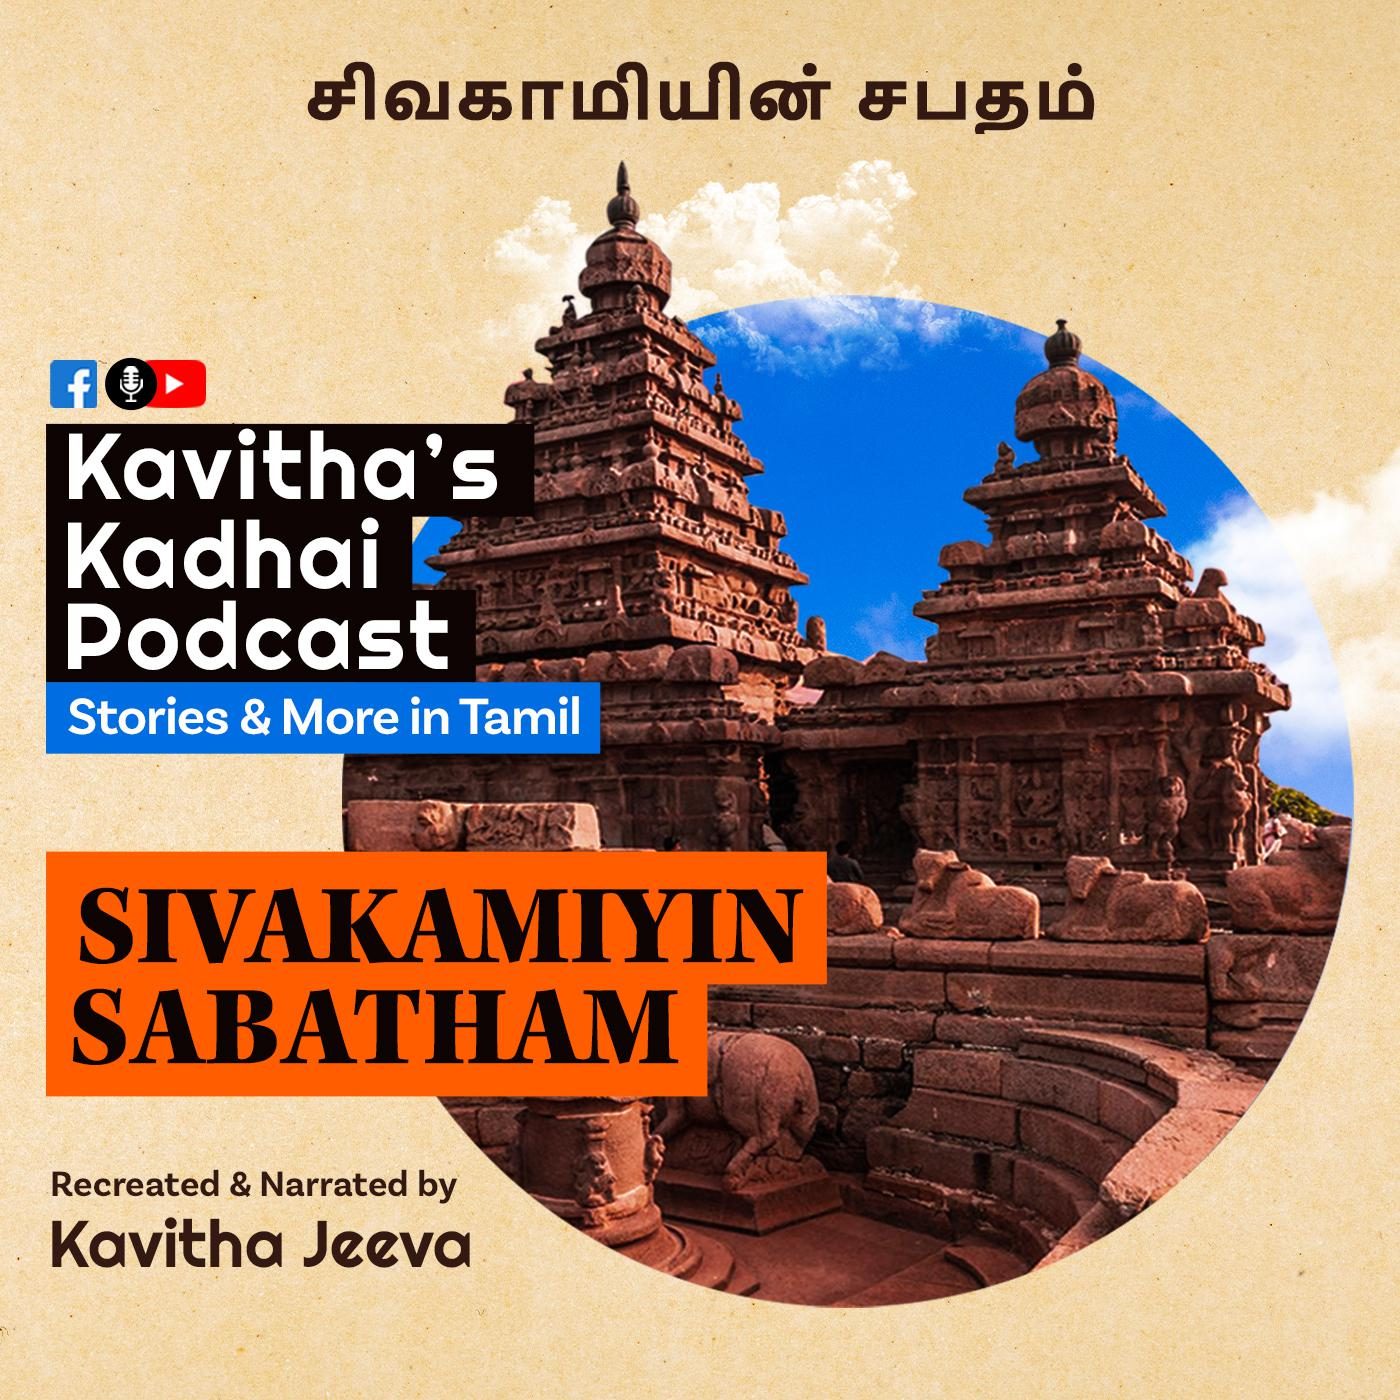 KadhaiPodcast's Sivakamiyin Sabatham with Kavitha Jeeva - Episode #100